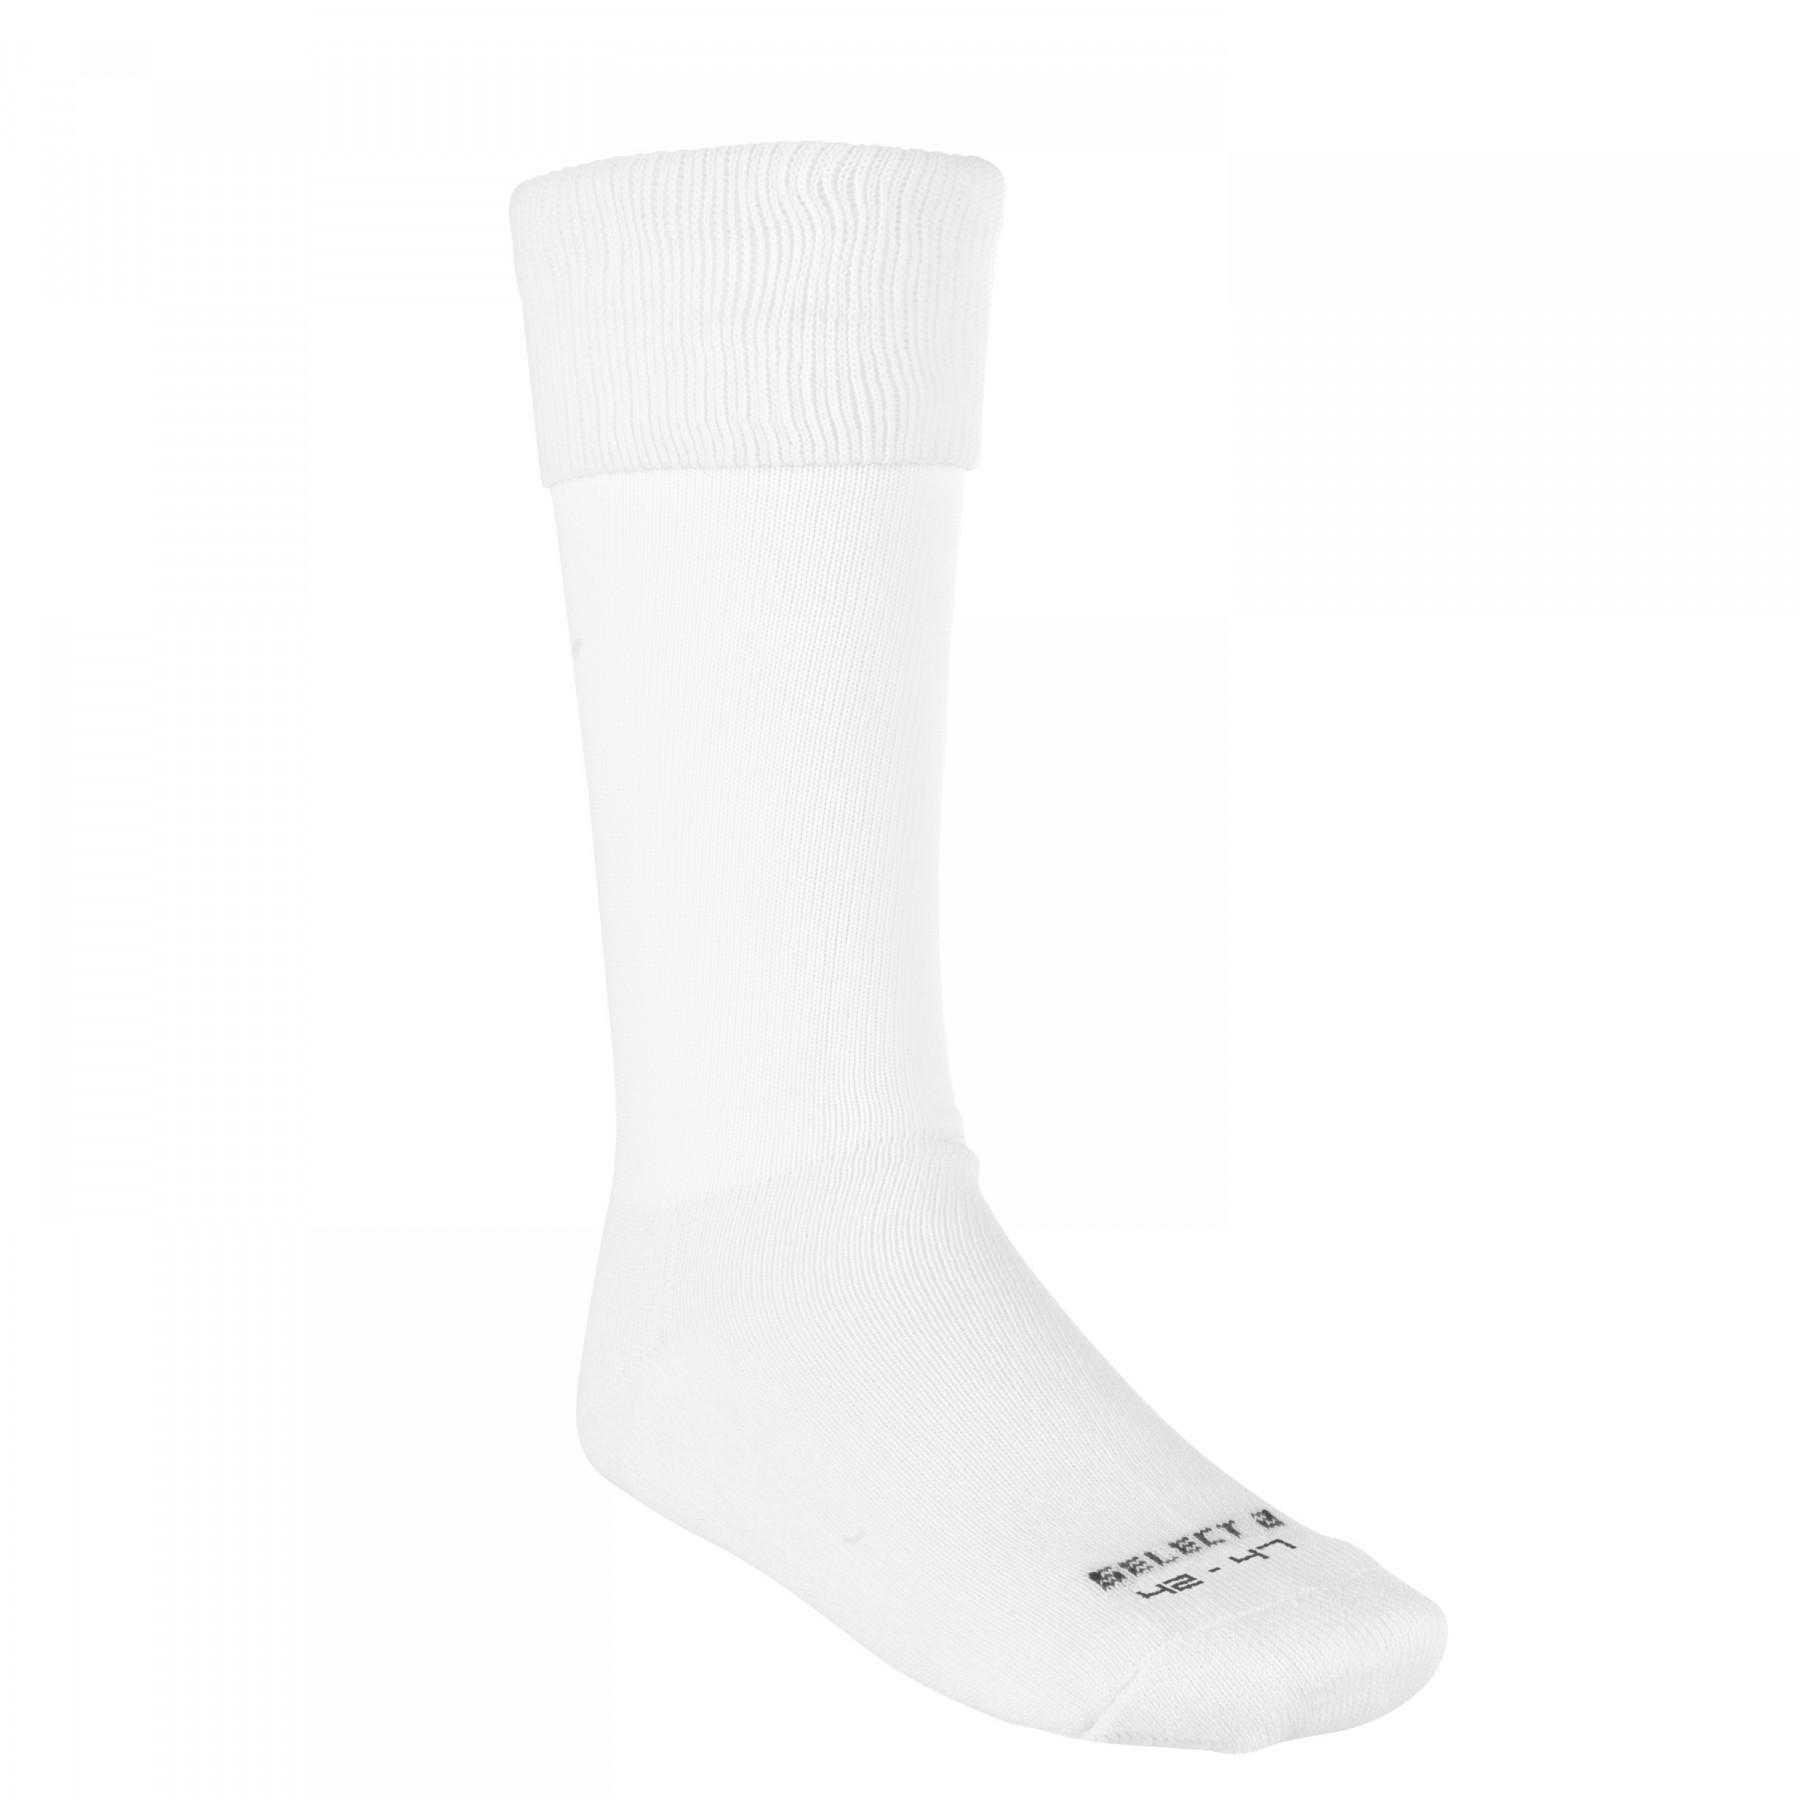 Football socks Select Standard